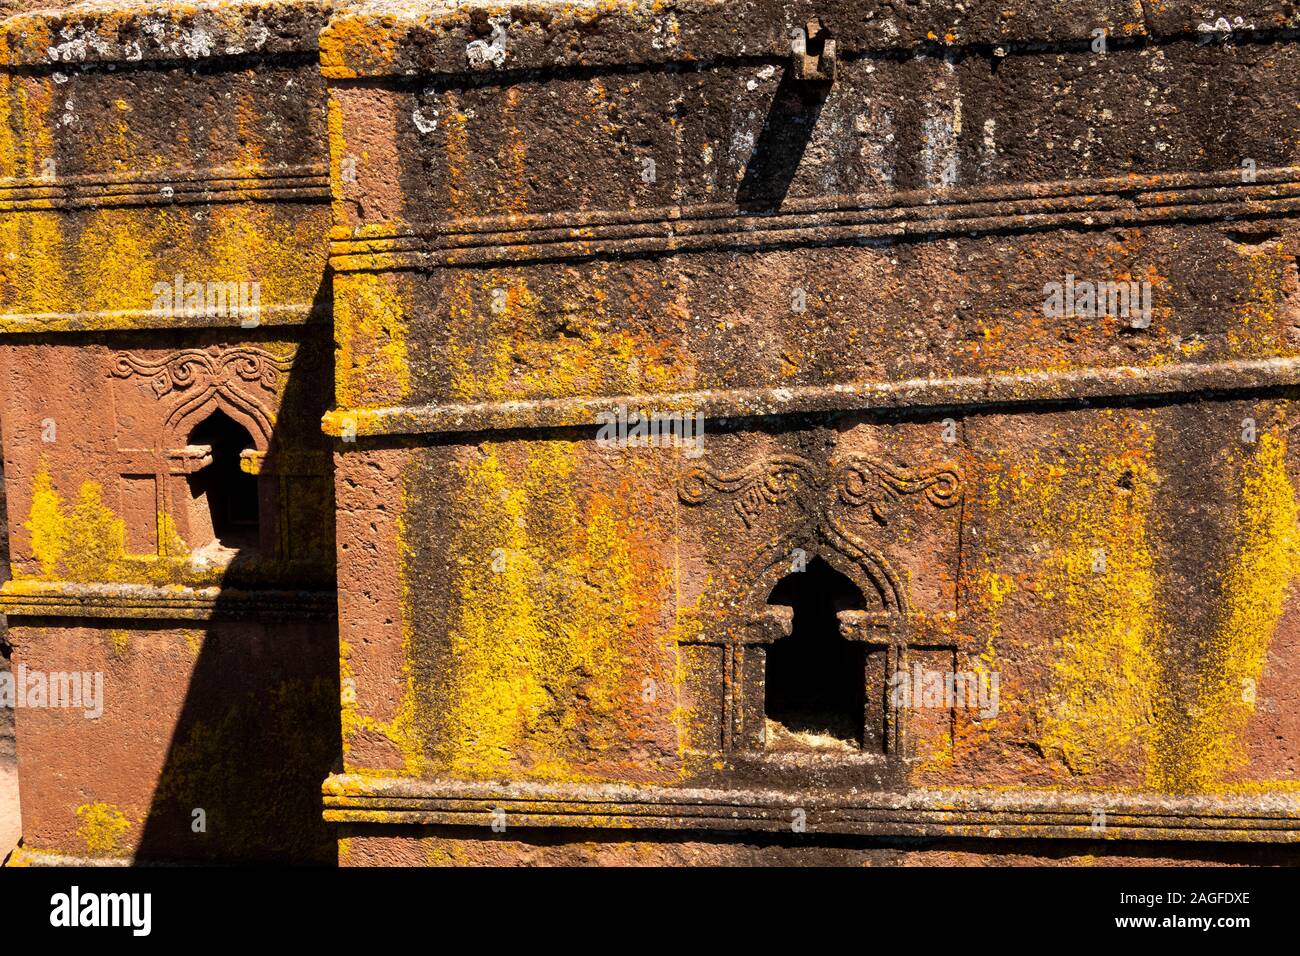 Ethiopia, Amhara Region, Lalibela, Bet Giyorgis, St George’s Lailibela’s only uncovered rock cut church, wall and window detail Stock Photo